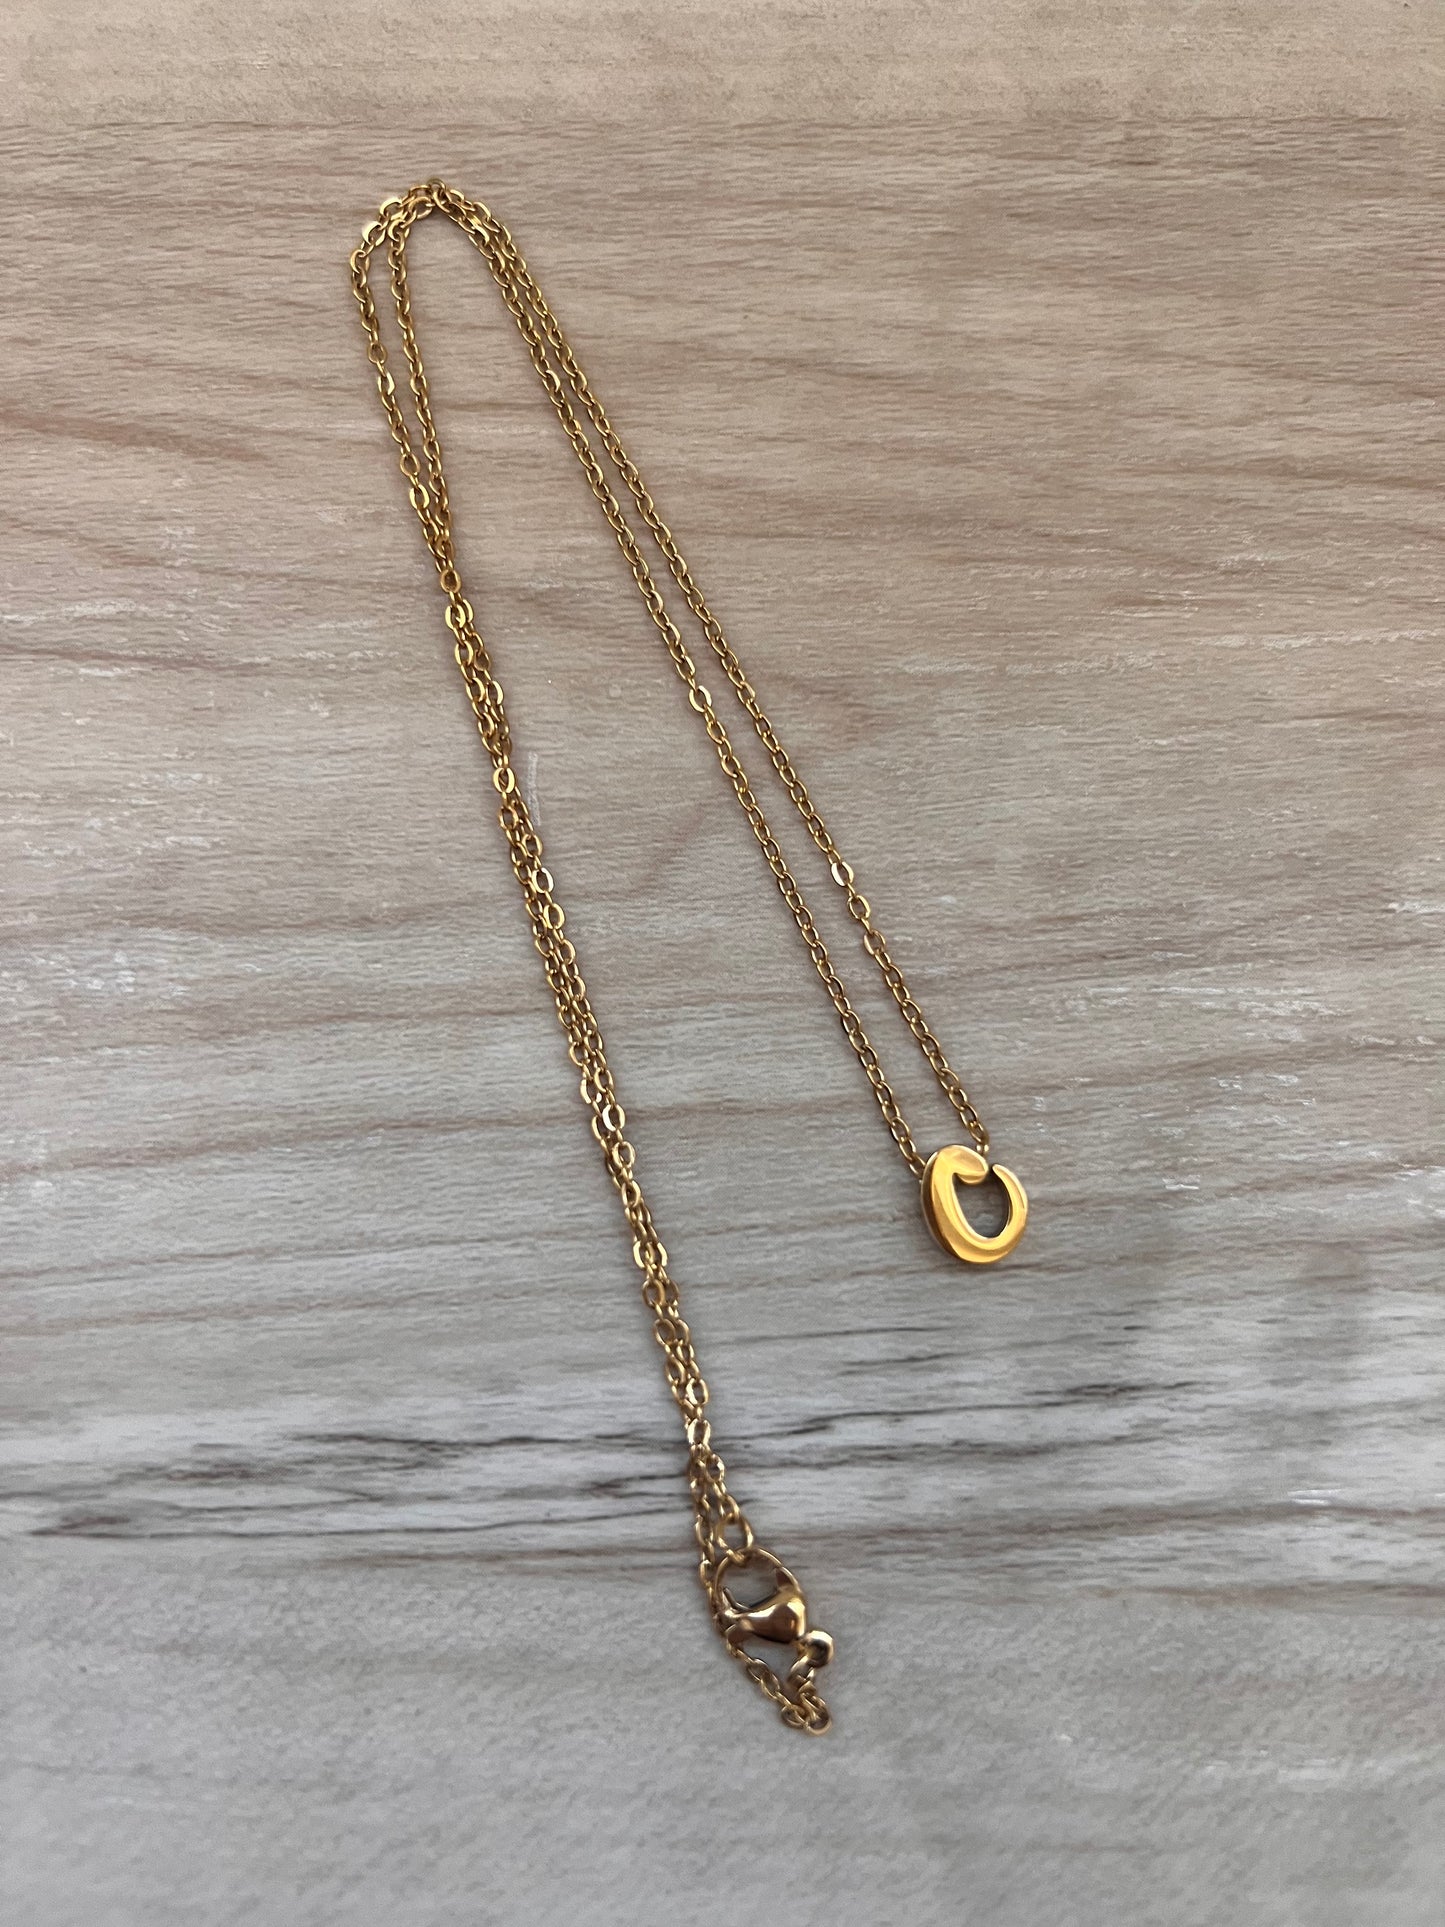 Cute Cursive Initial Necklace -Gold